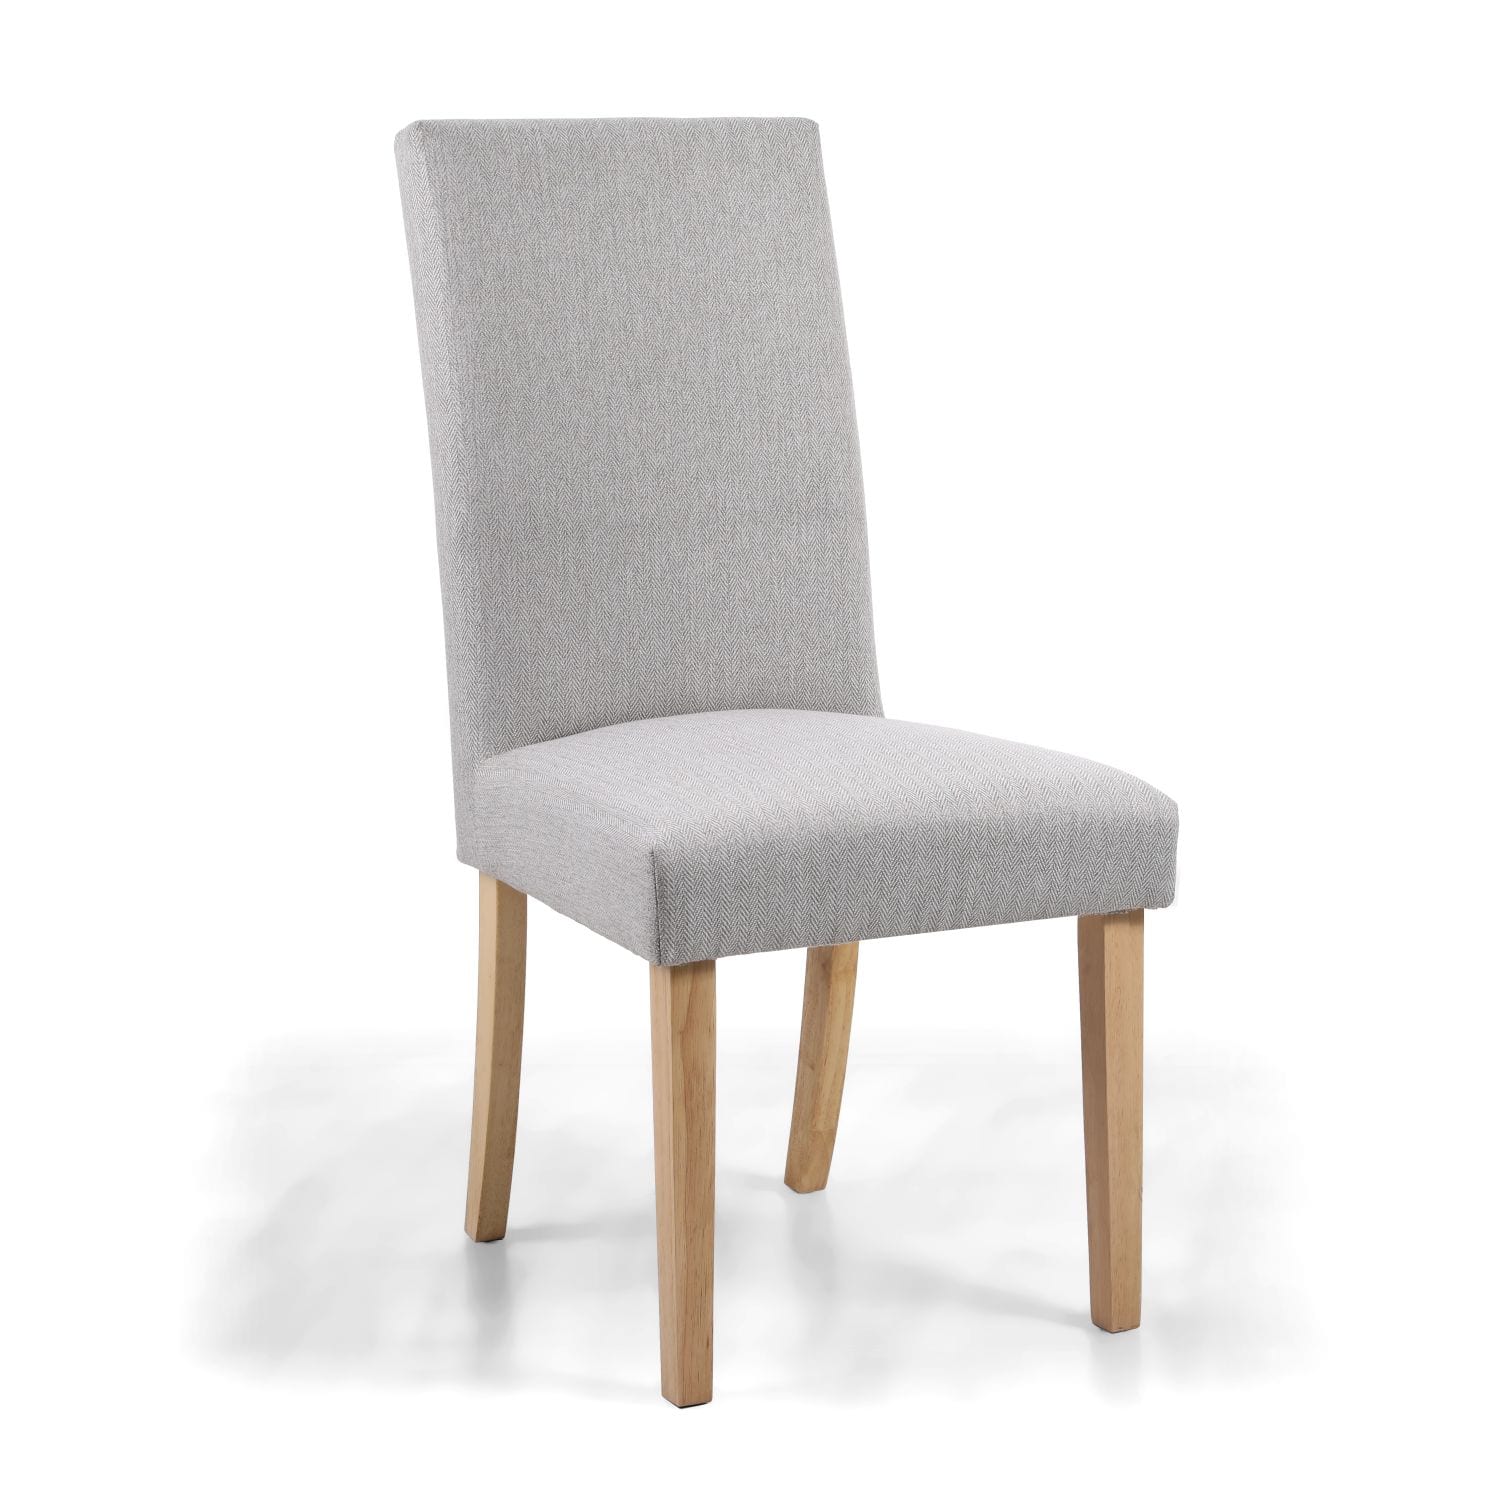 Medley Herringbone Plain Cappuccino Chair In Legs